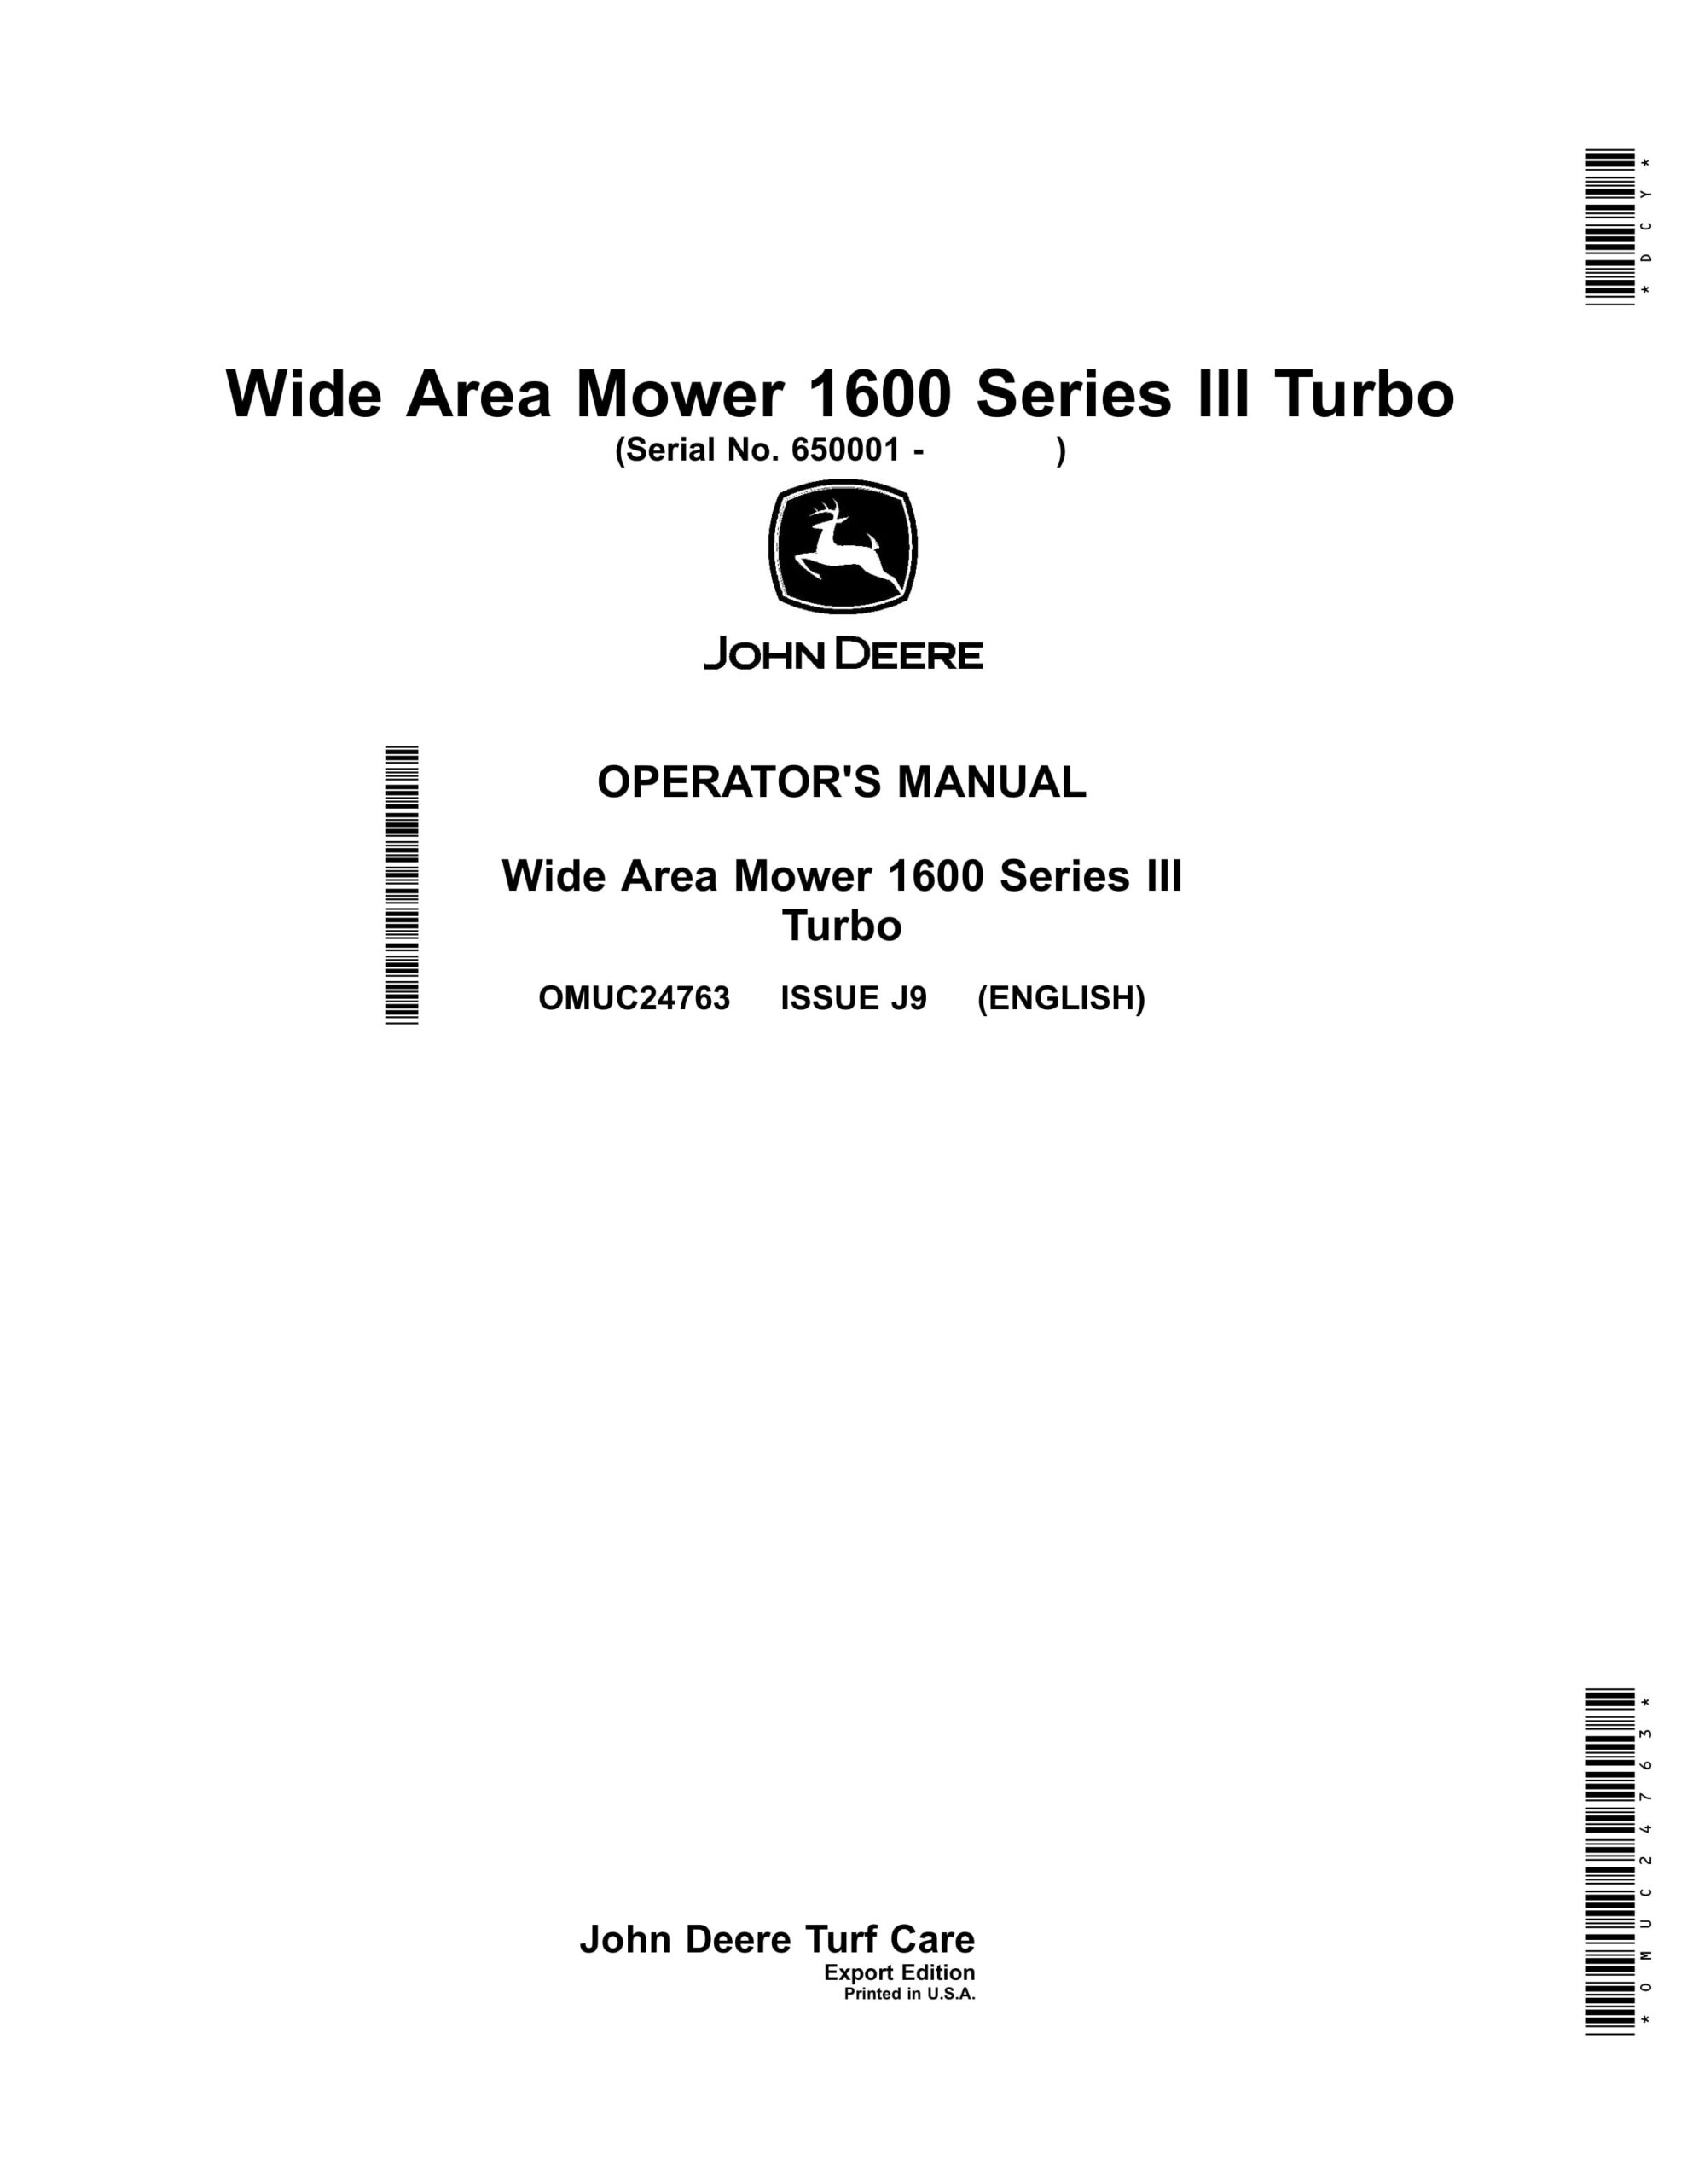 John Deere 1600 Series III Turbo Wide Area Mower Operator Manual OMUC24763-1